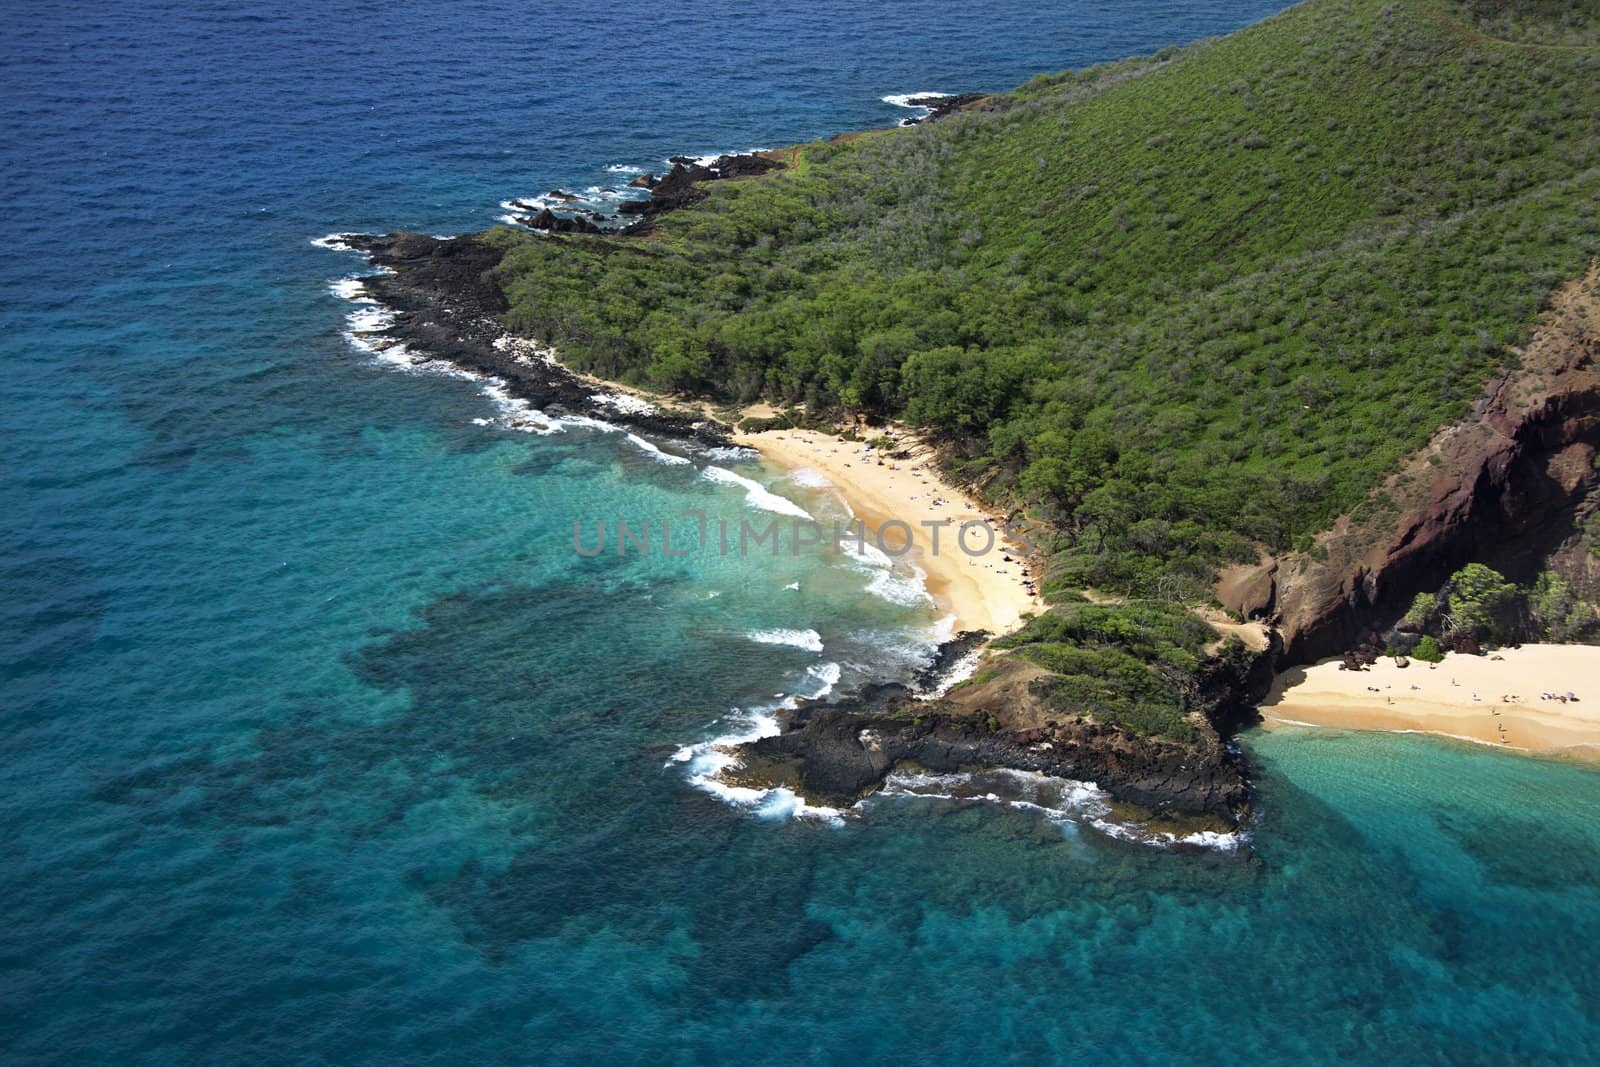 Aerial of Maui, Hawaii beach and Pacific ocean.